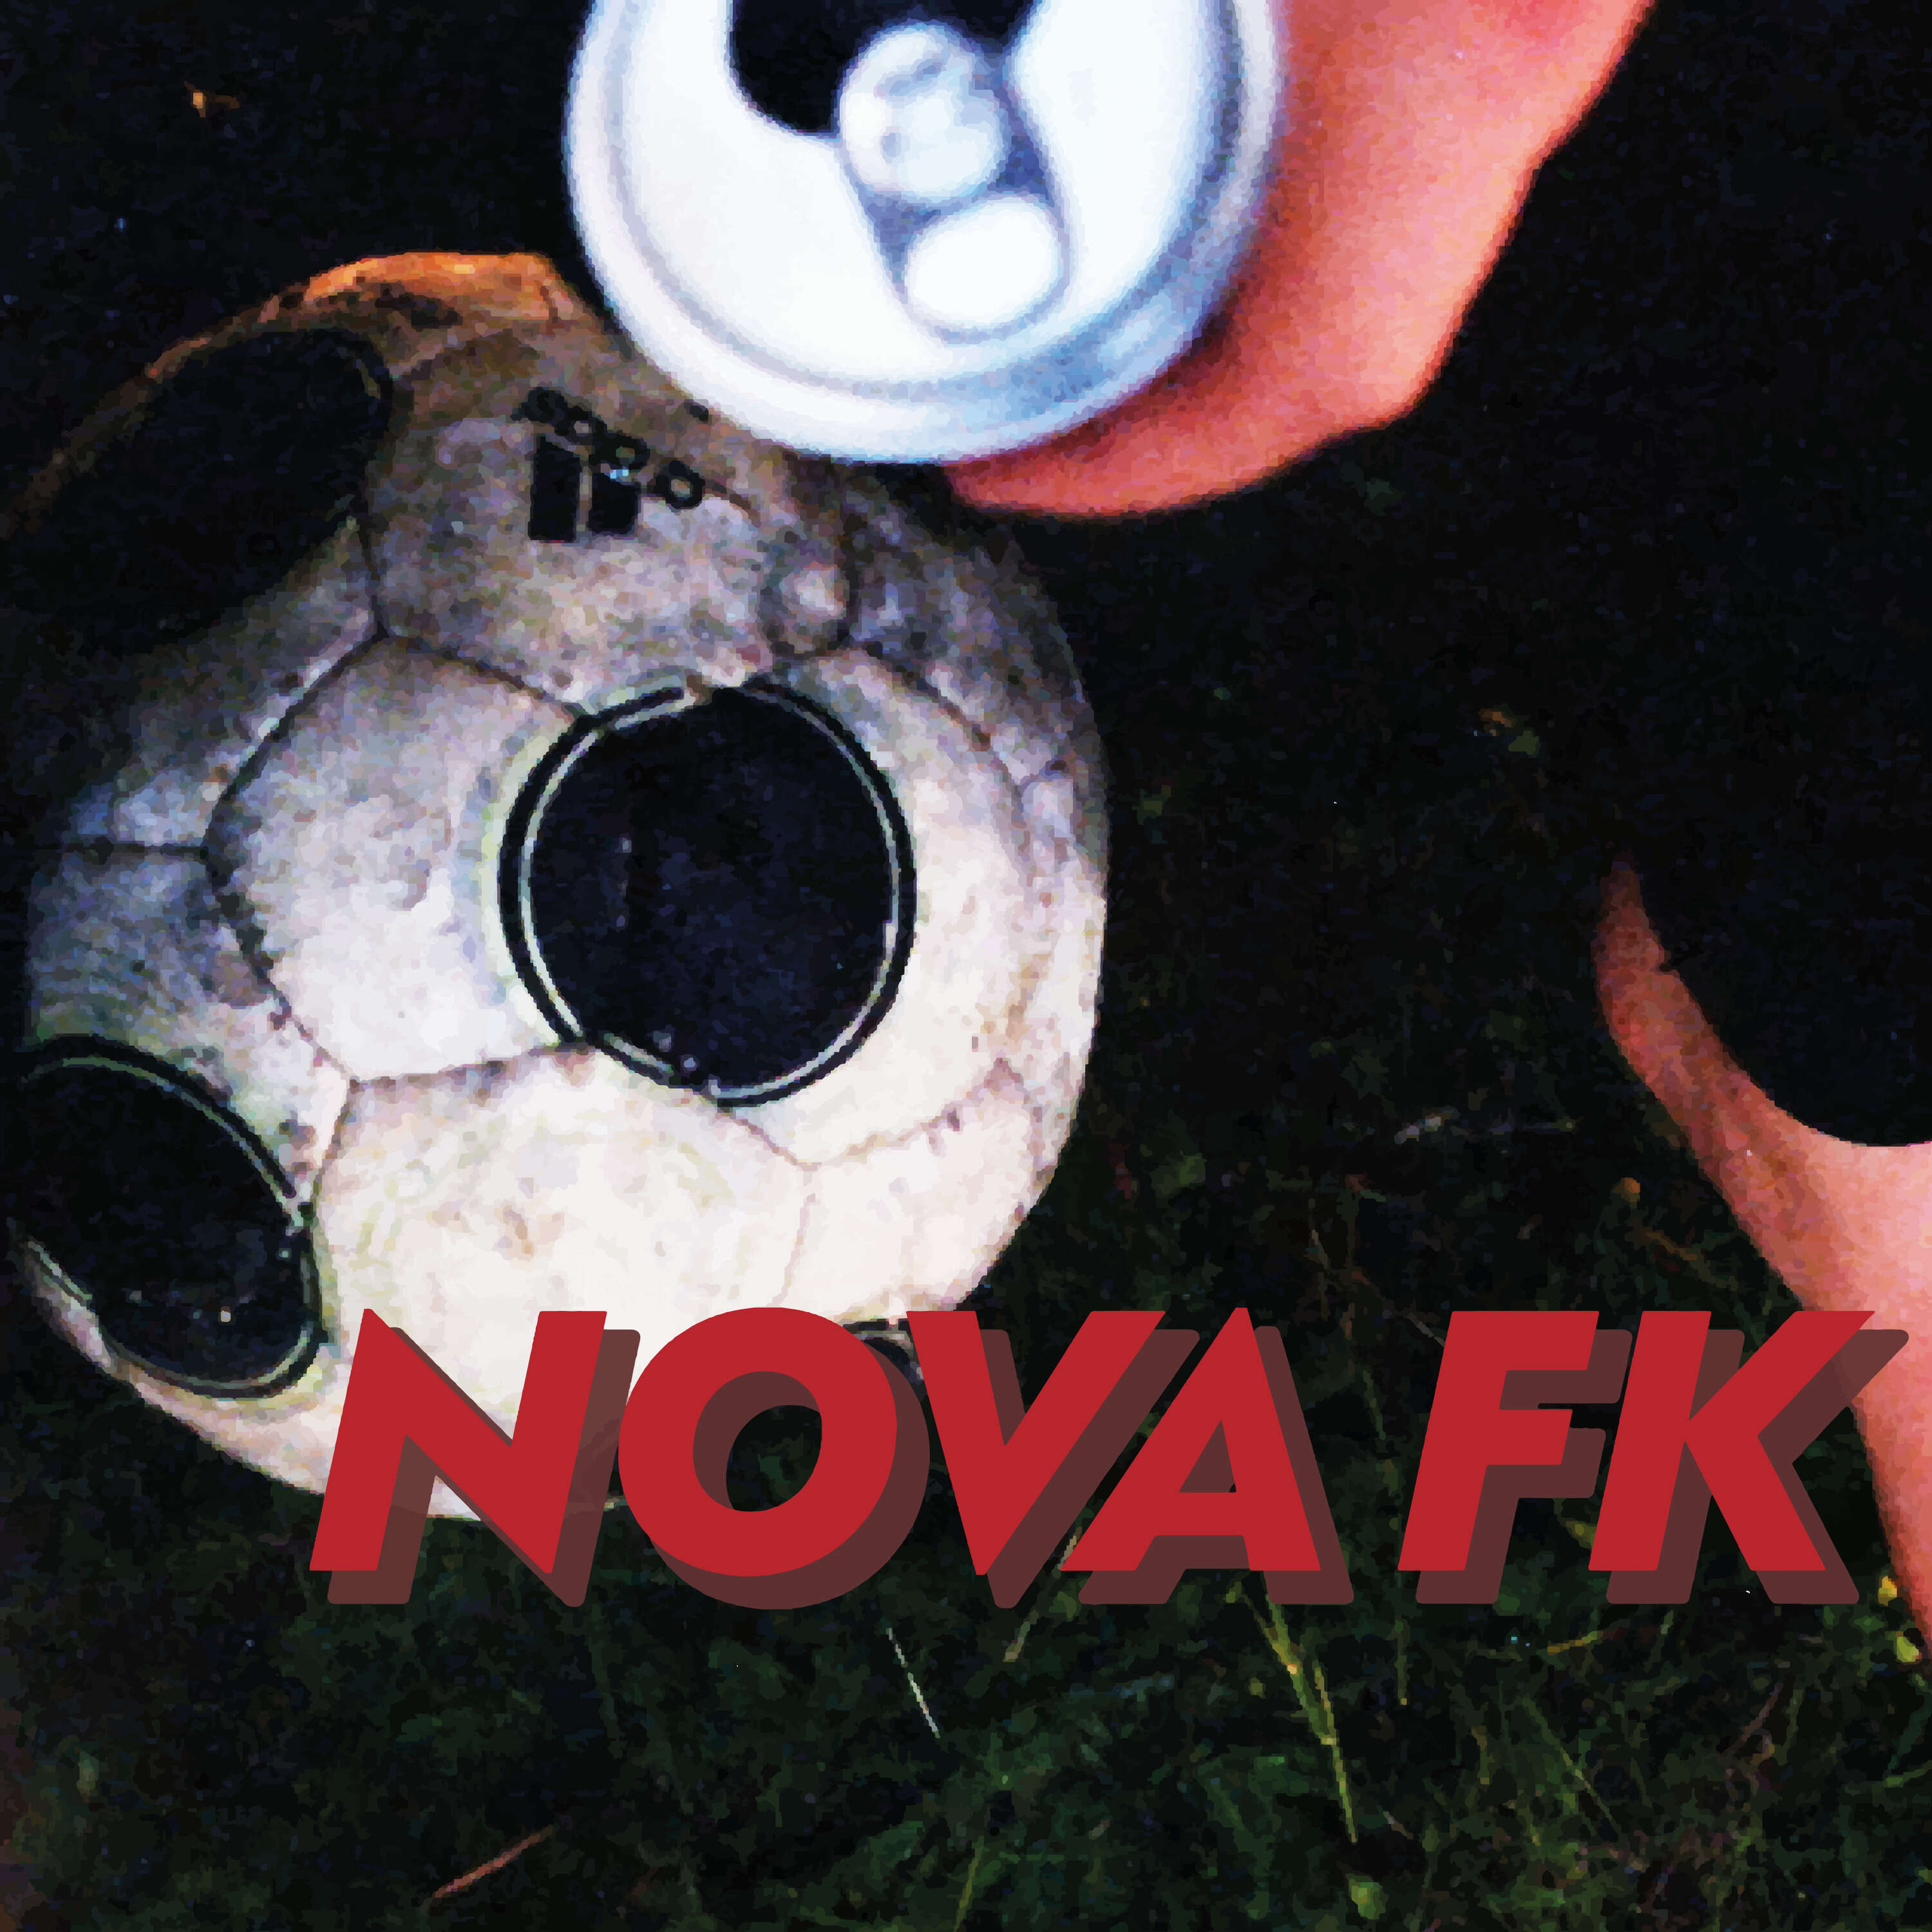 Nova FK #12 - Agent Trent